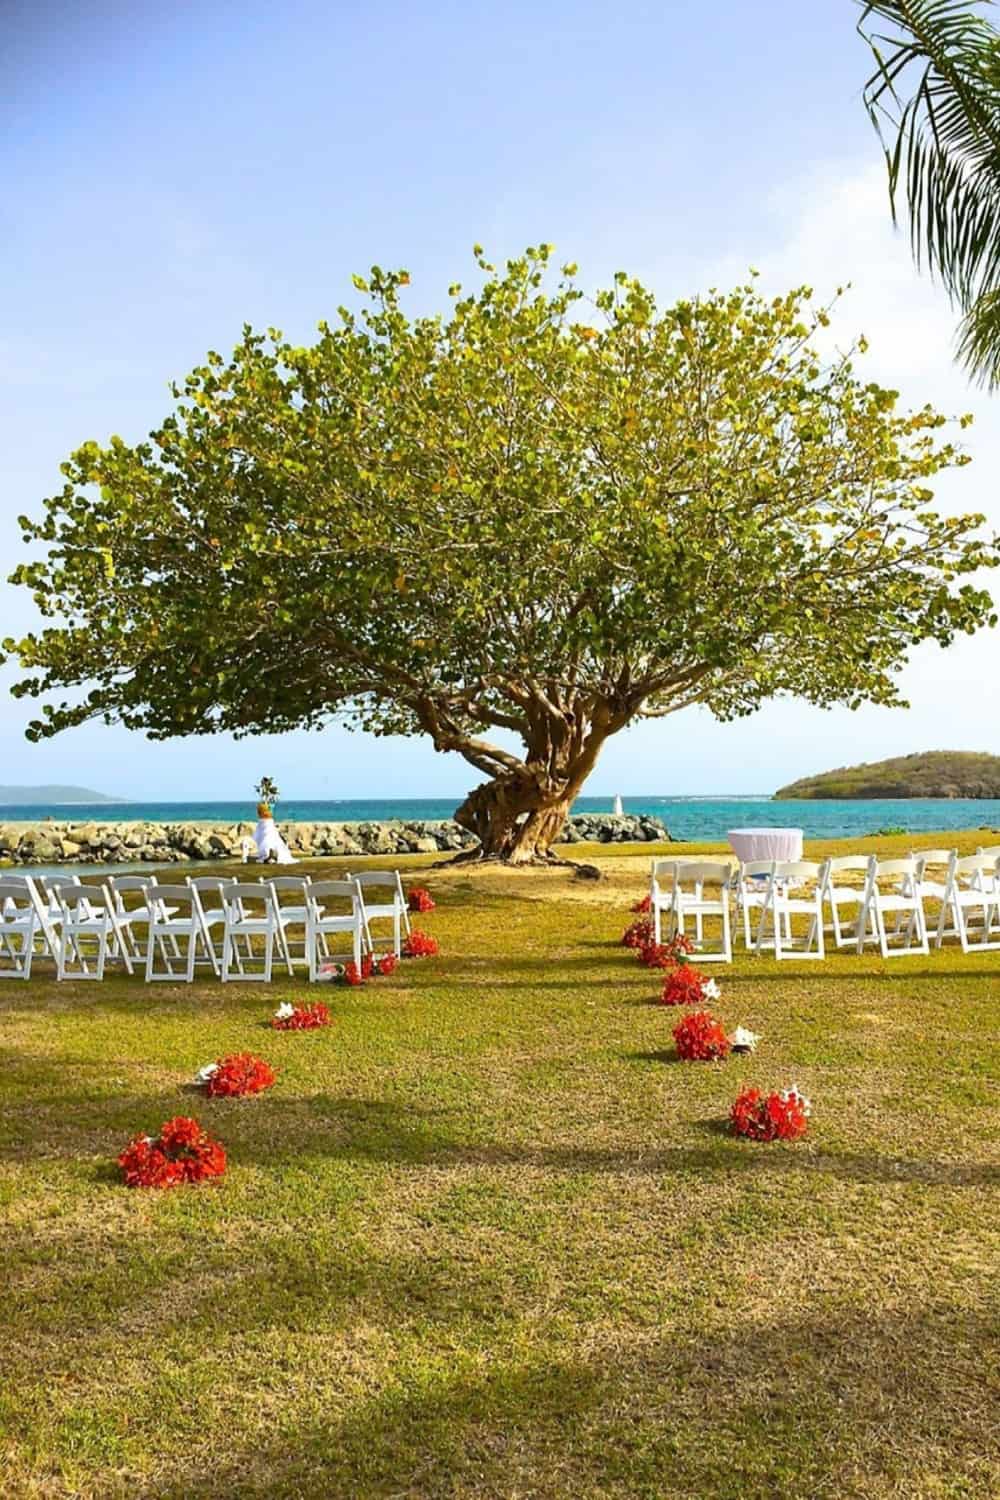 St Croix honeymoons and beach weddings at Tamarind